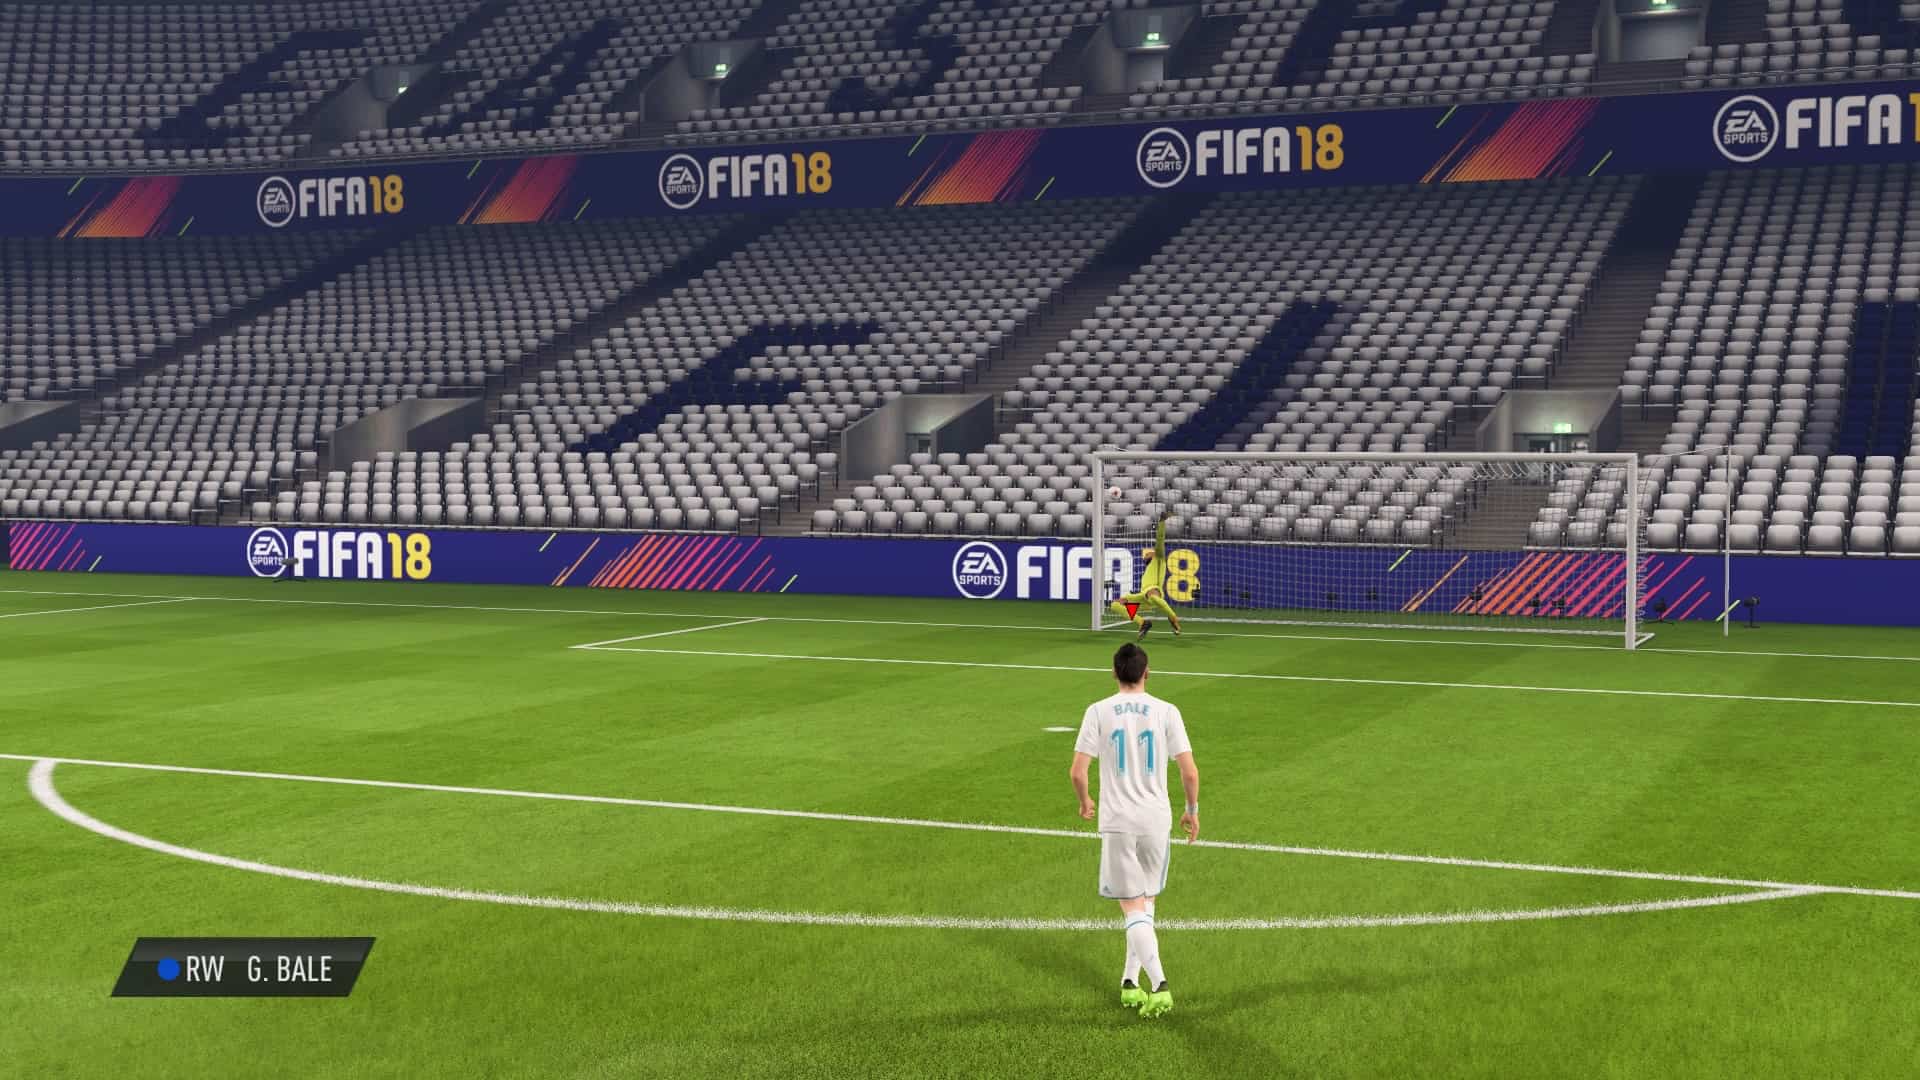 Gareth Bale taking a Free Kick in FIFA 18